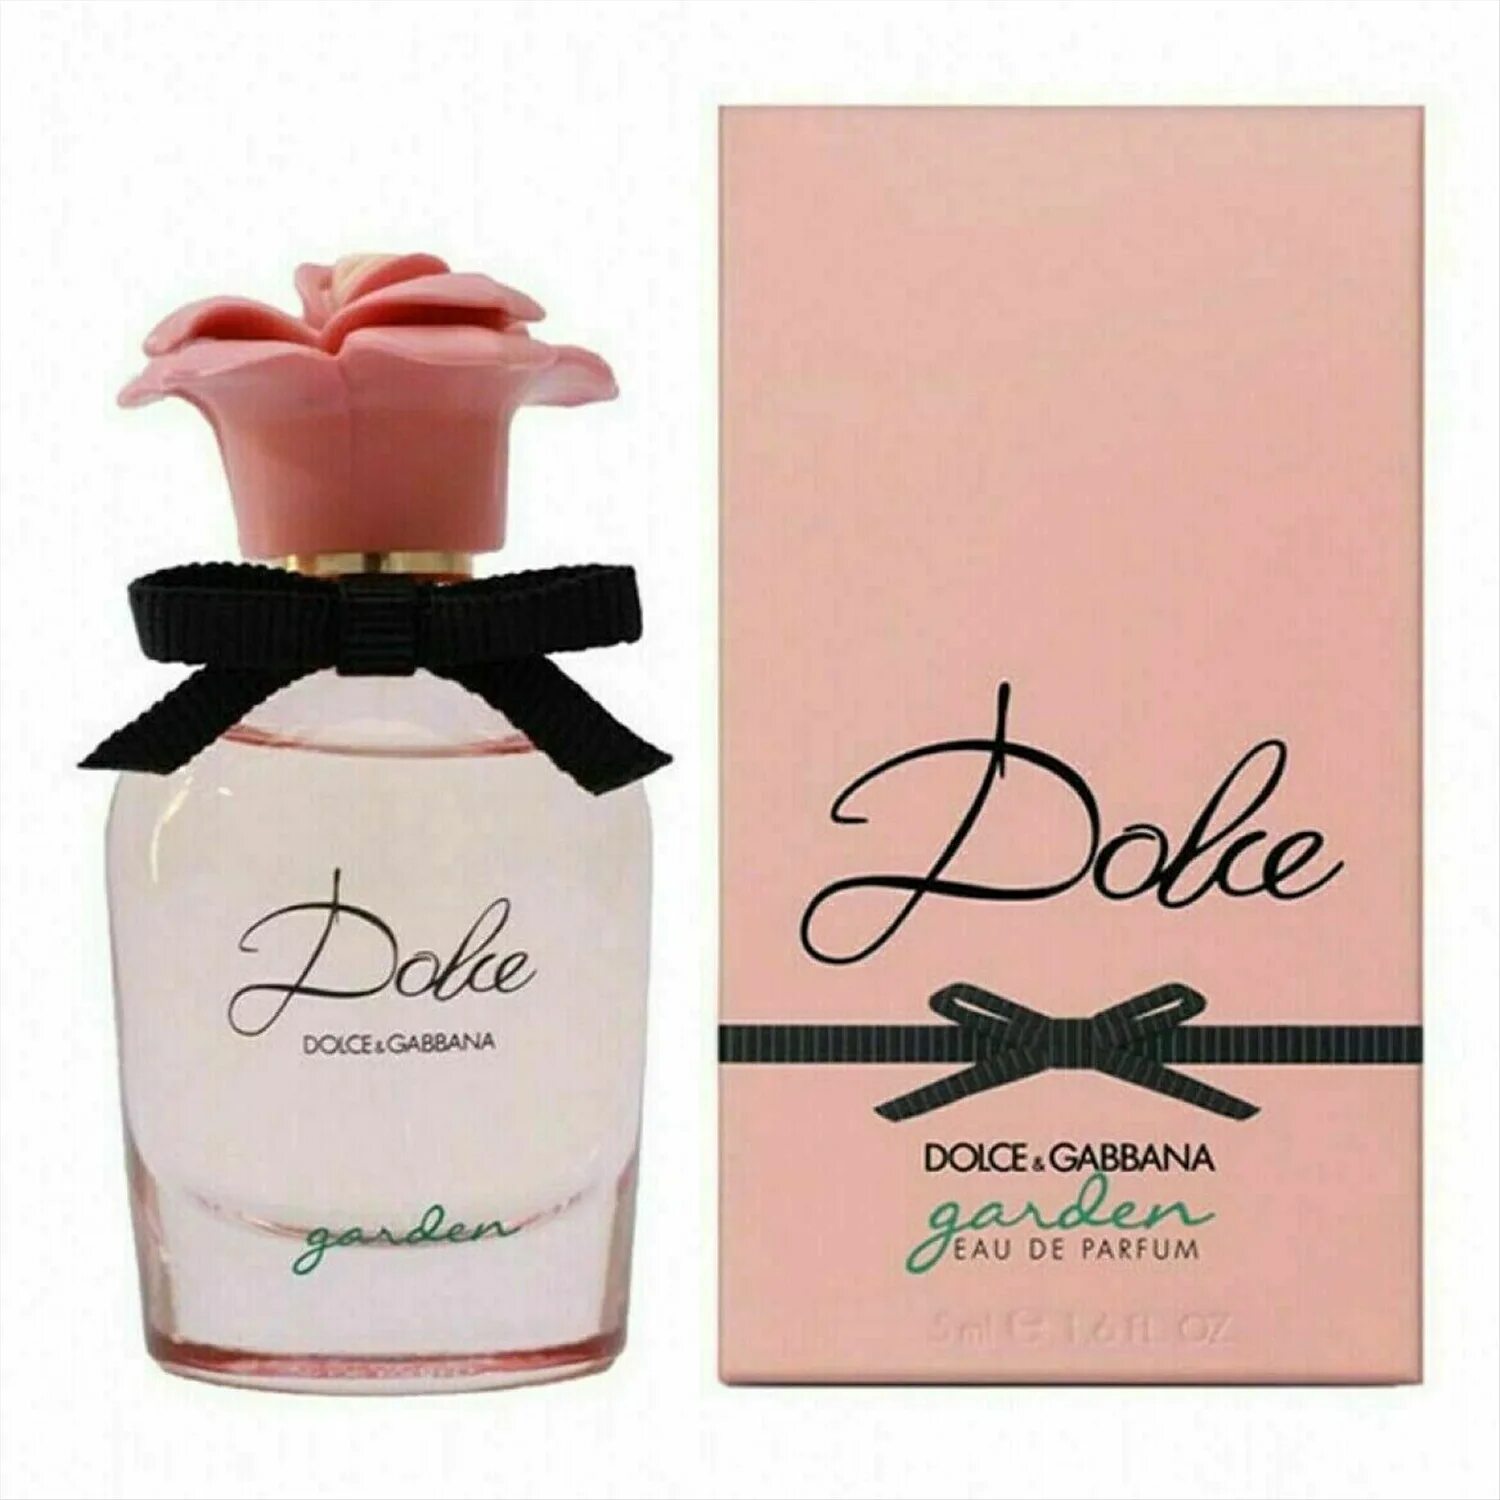 D&G Dolce Garden EDP 75ml. Dolce&Gabbana Dolce Garden 75. Dolce Gabbana Dolce Garden. Dolce Gabbana Dolce Lady 30ml EDP. Золотое яблоко dolce